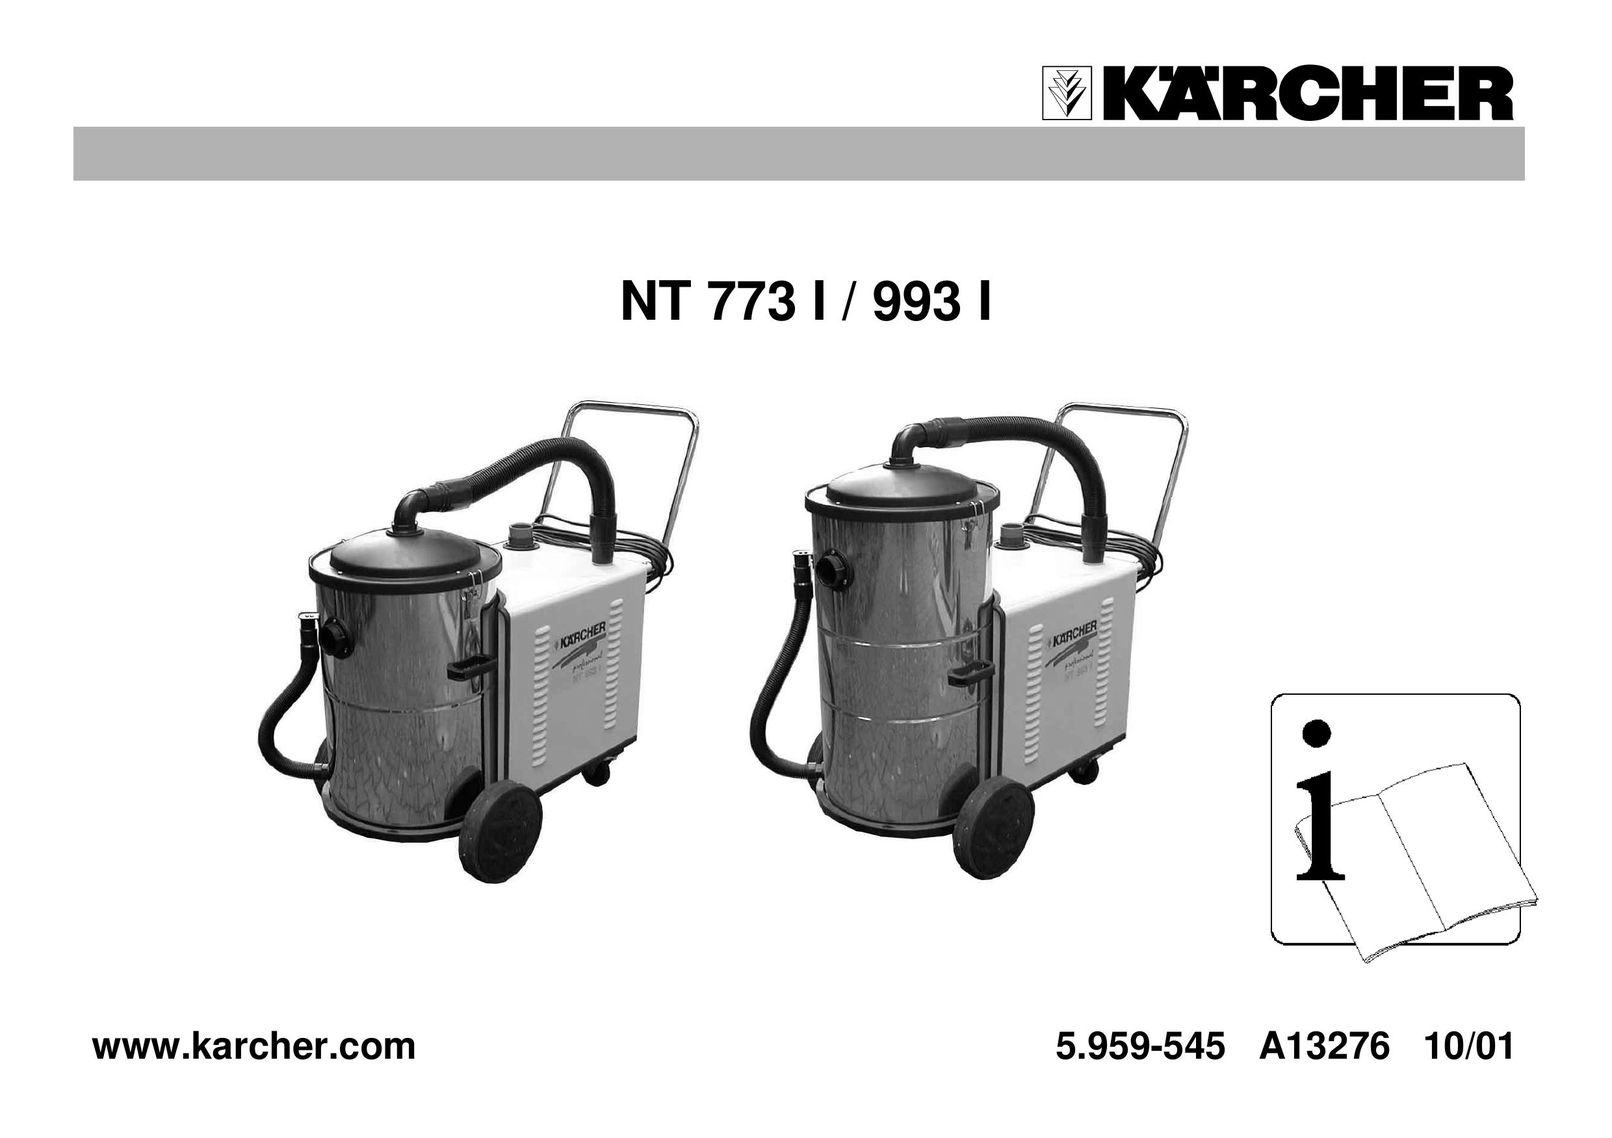 Karcher NT 993 I Vacuum Cleaner User Manual